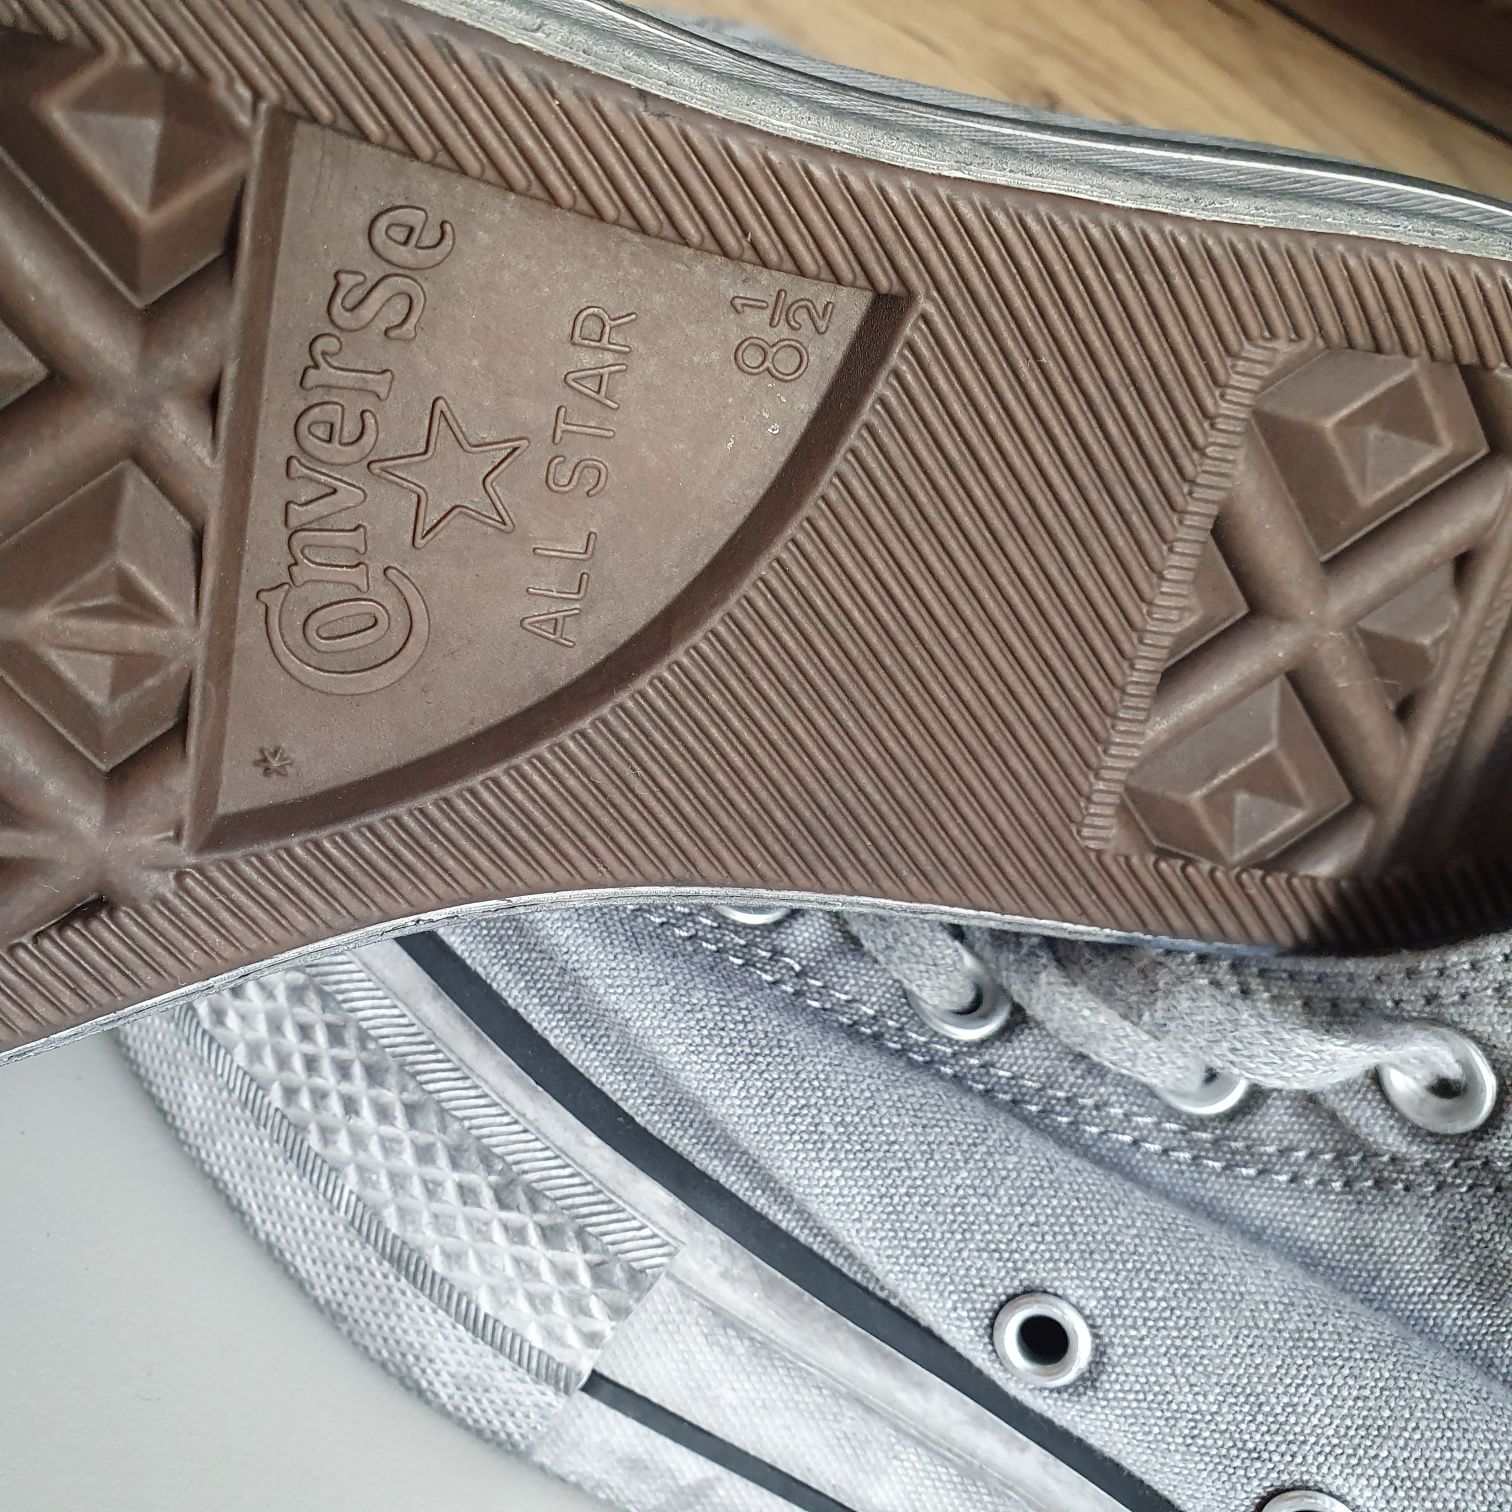 Nowe buty Converse szare 42 9A 2107 A34